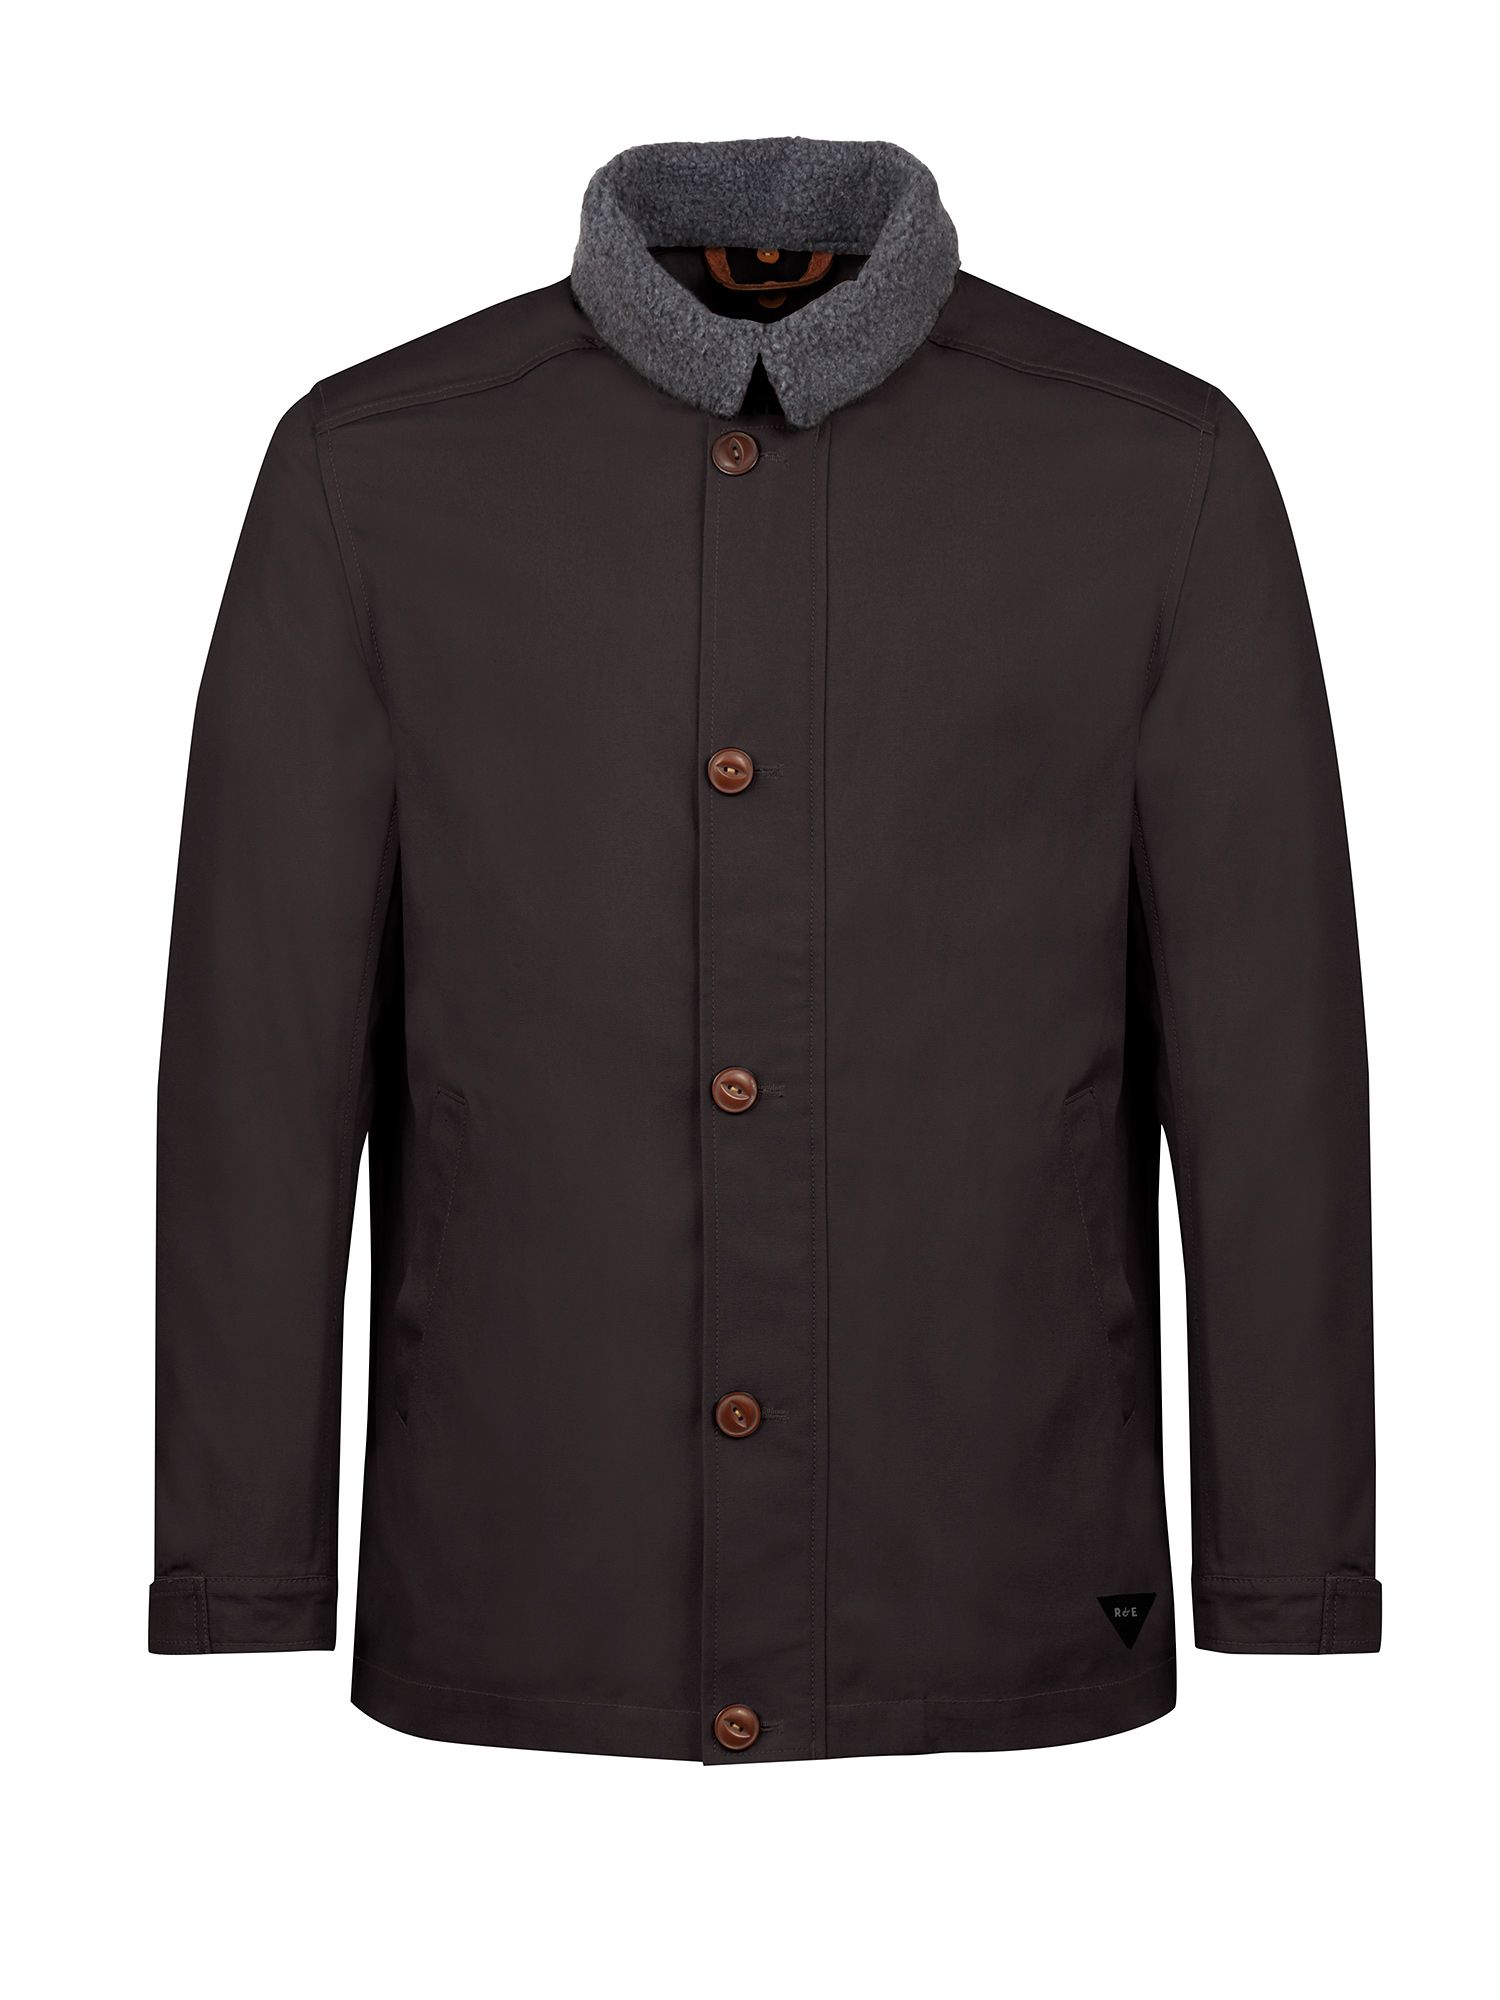 Realm & empire Car Coat With Detachable Fleece Collar in Black for